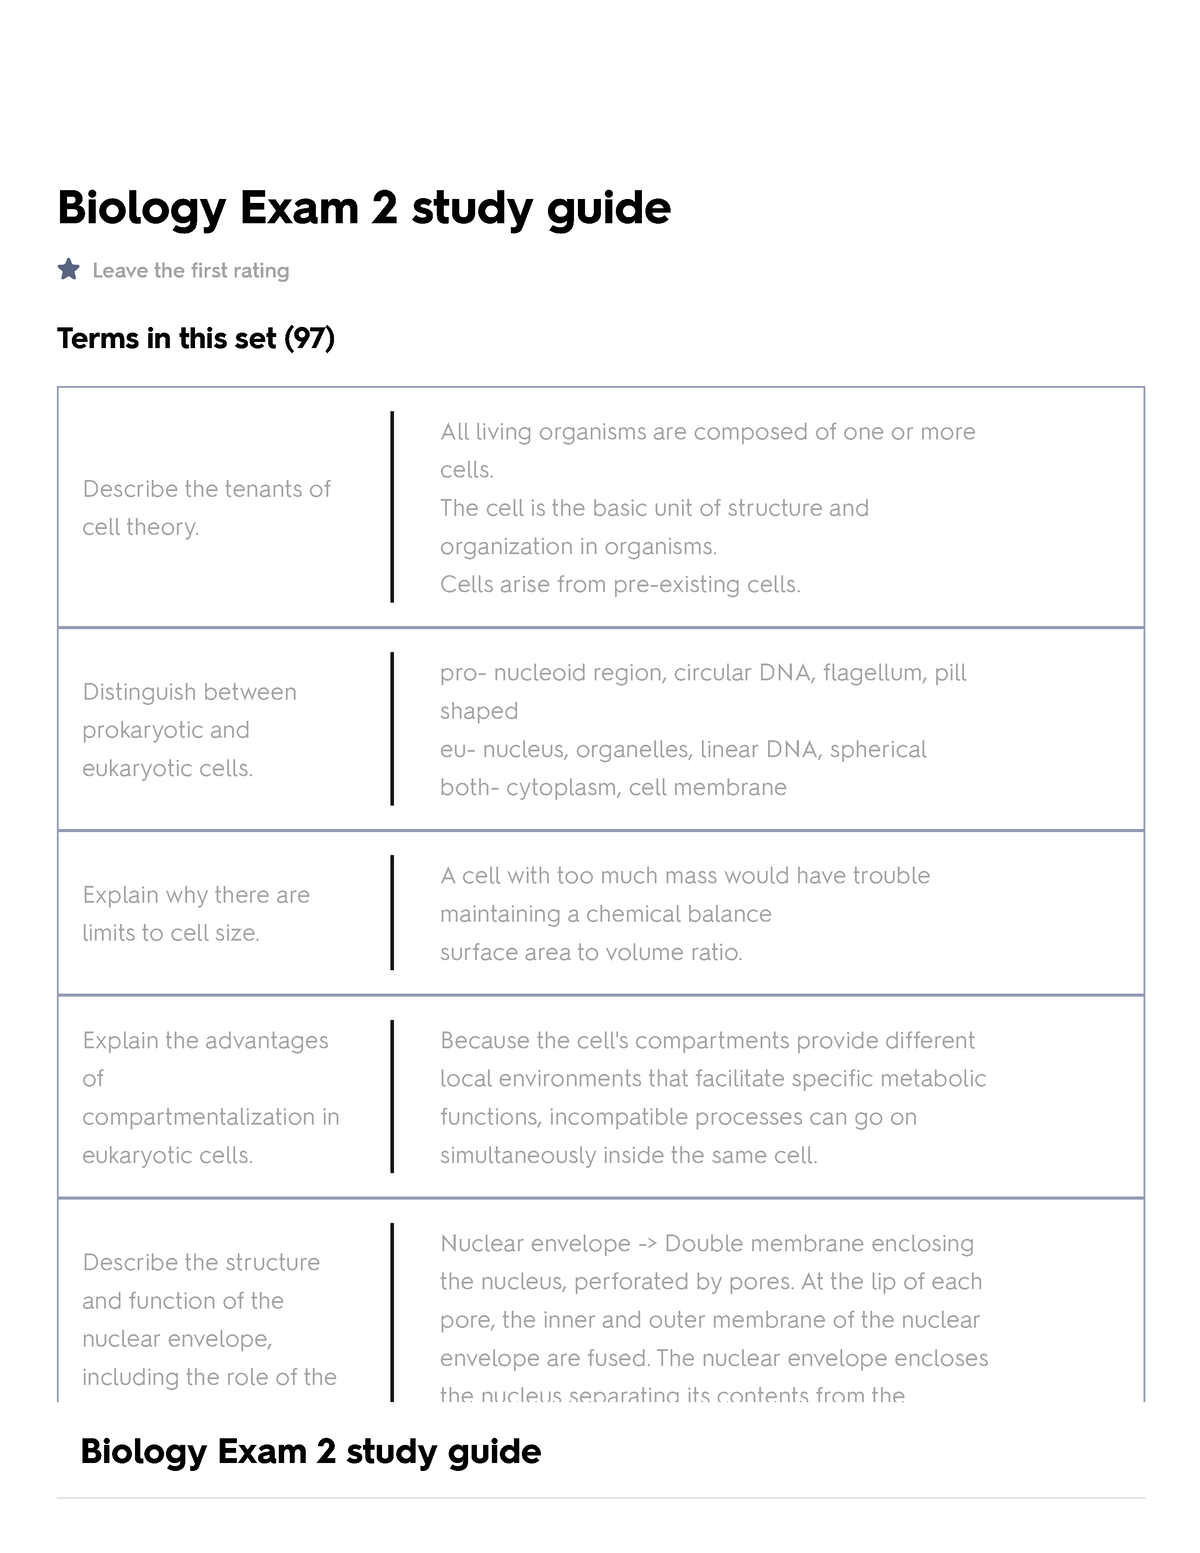 Biology Exam 2 study guide Flashcards Quizlet Biology Exam 2 study